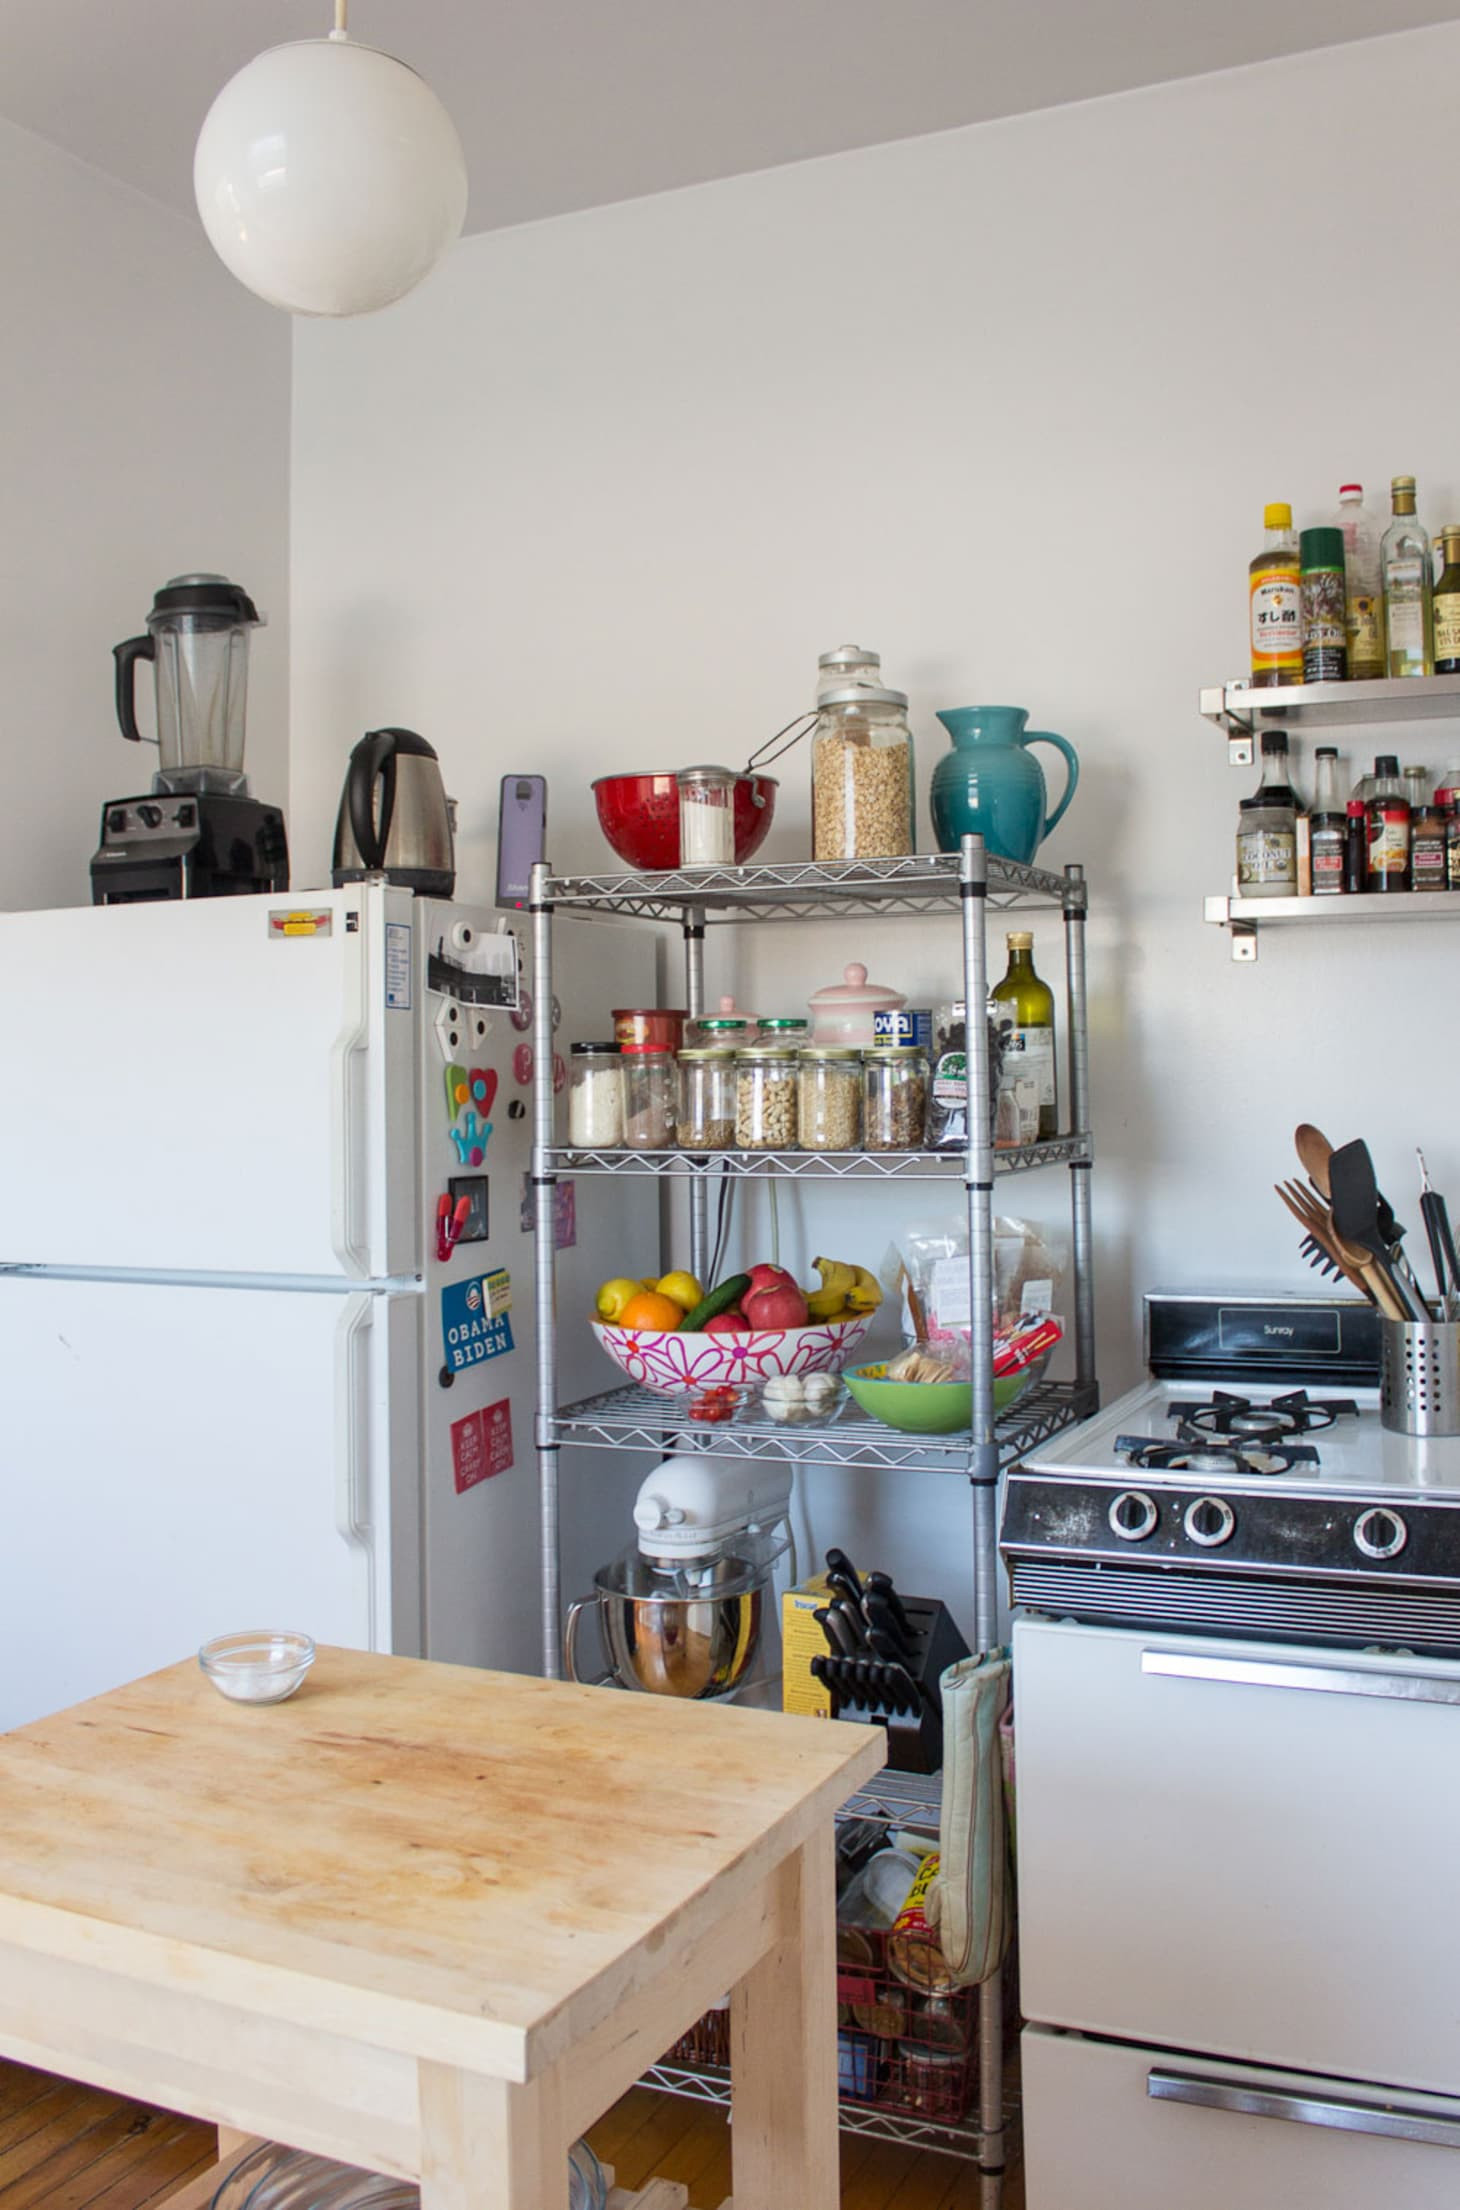 Small Kitchen Storage Ideas
 The 21 Best Storage Ideas for Small Kitchens